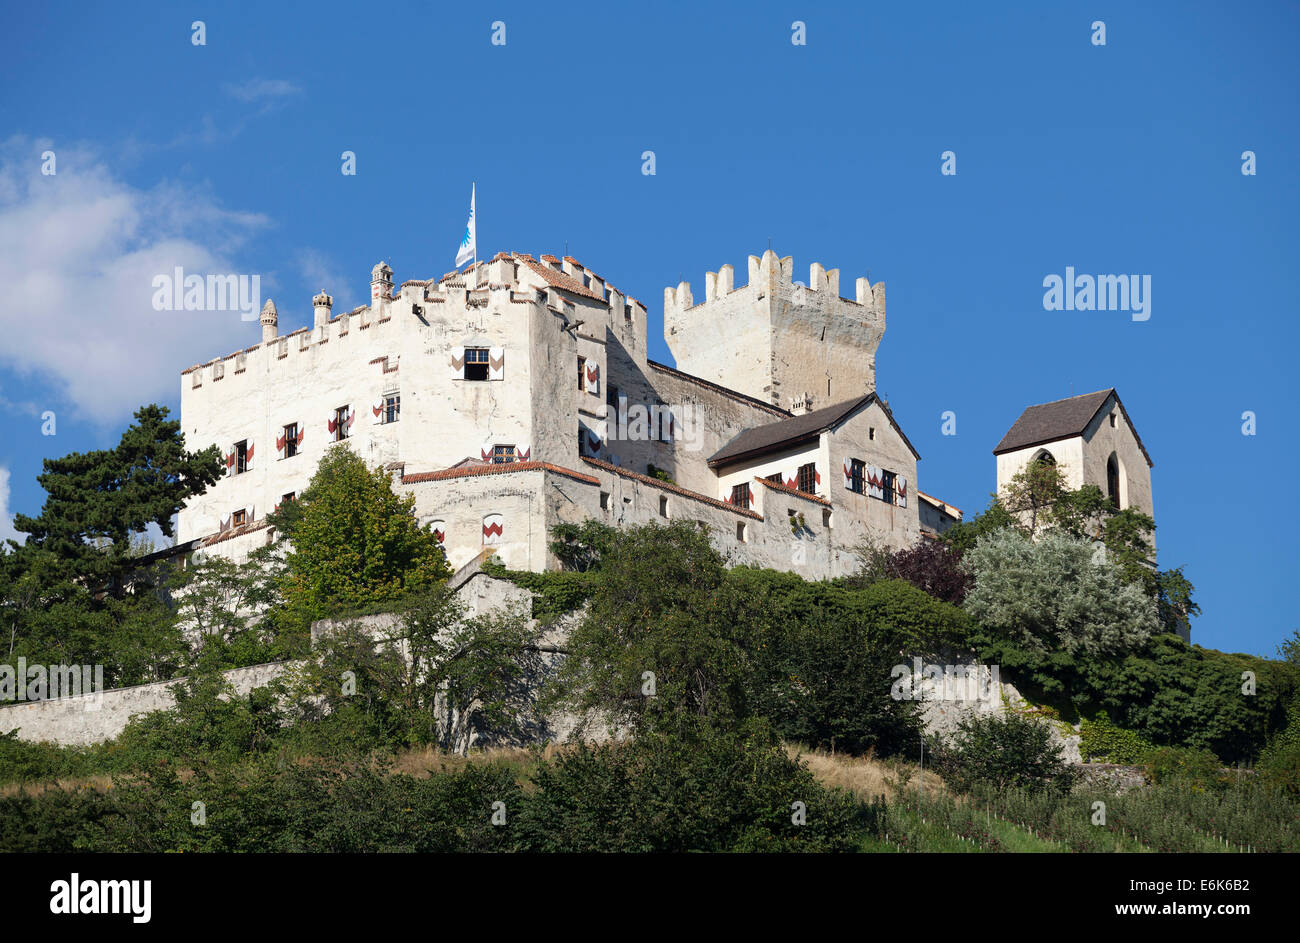 Castel Coira Castle, Schluderns, Vinschgau Valley, Alto Adige, Italy Stock Photo